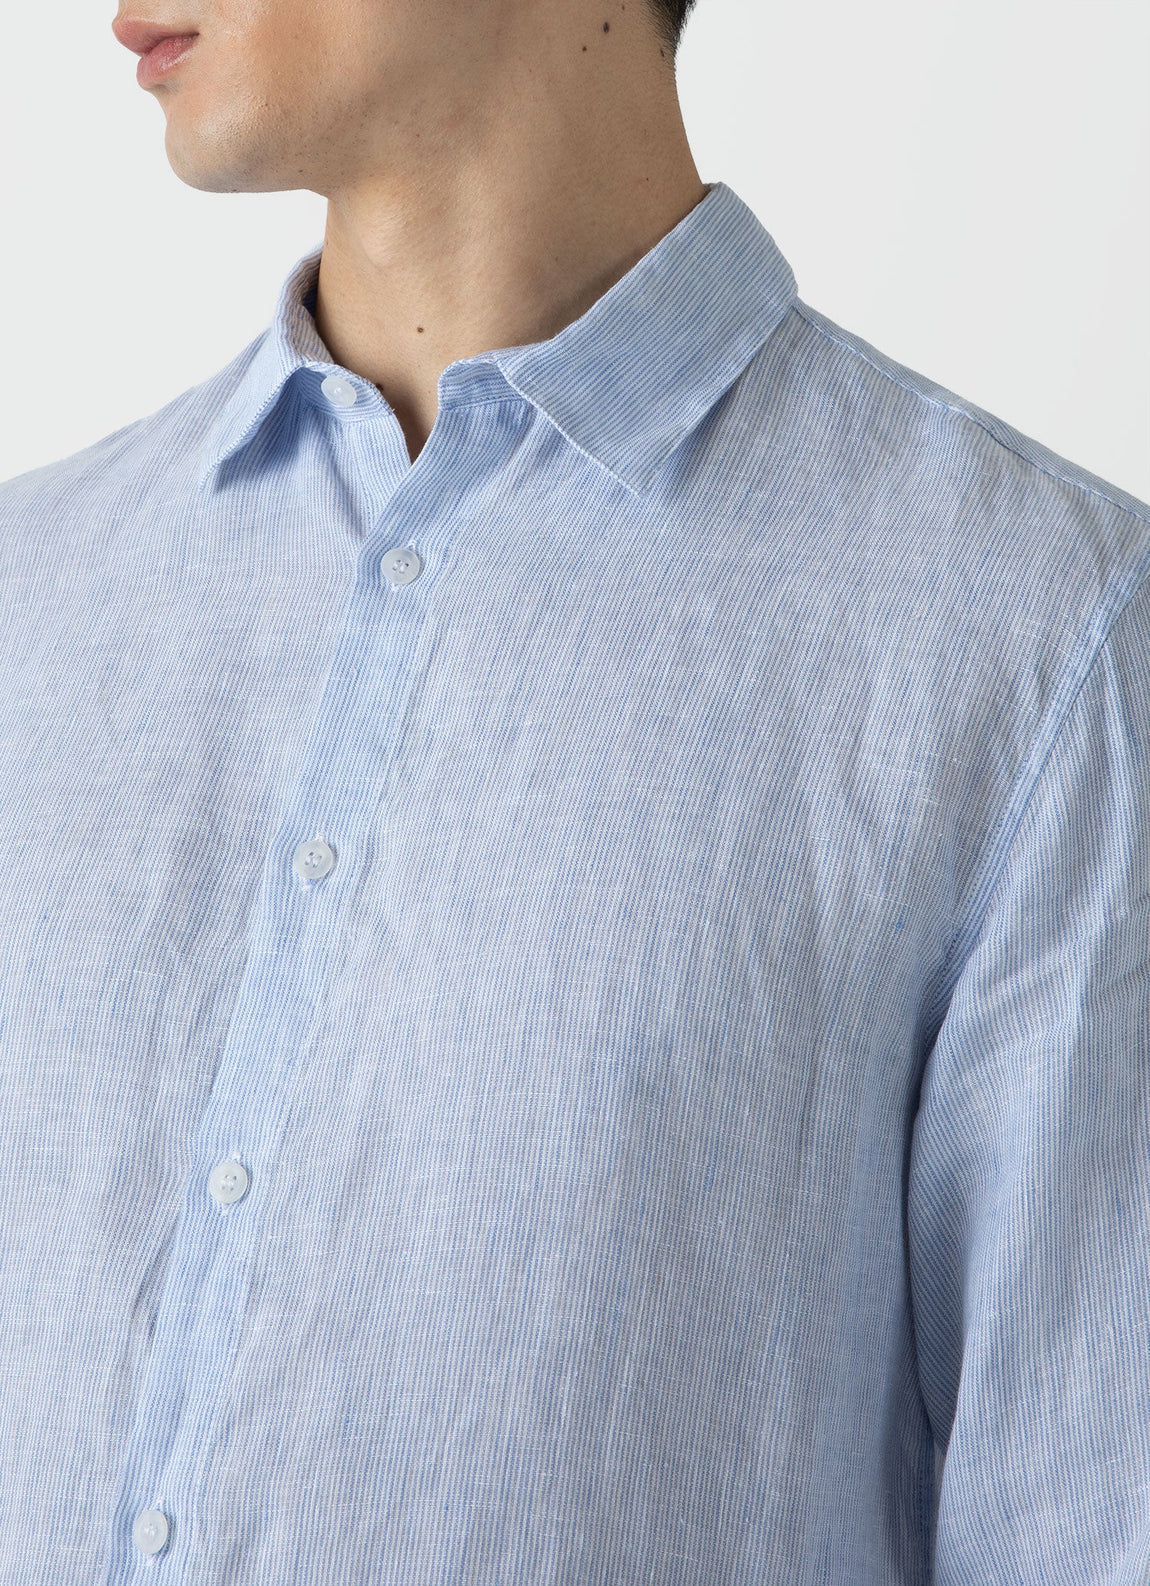 Men's Linen Shirt in Cool Blue Micro Stripe